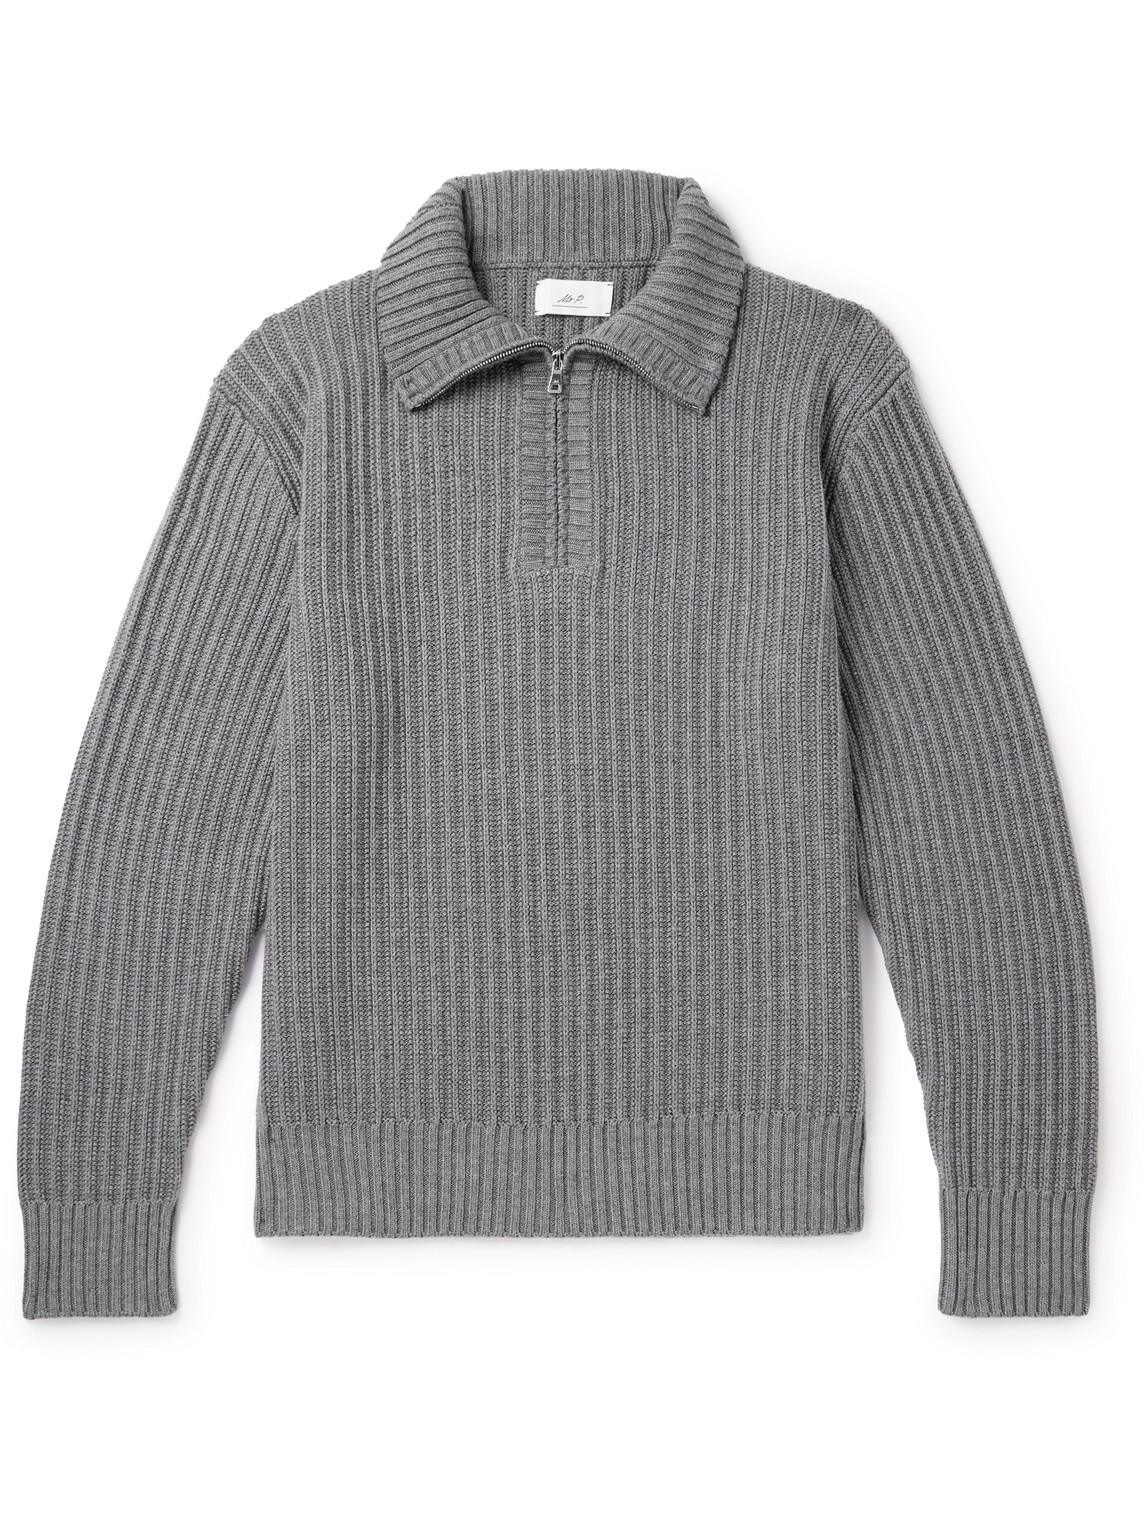 Mr P. - Ribbed Merino Wool Half-Zip Sweater - Men - Gray - XXL von Mr P.